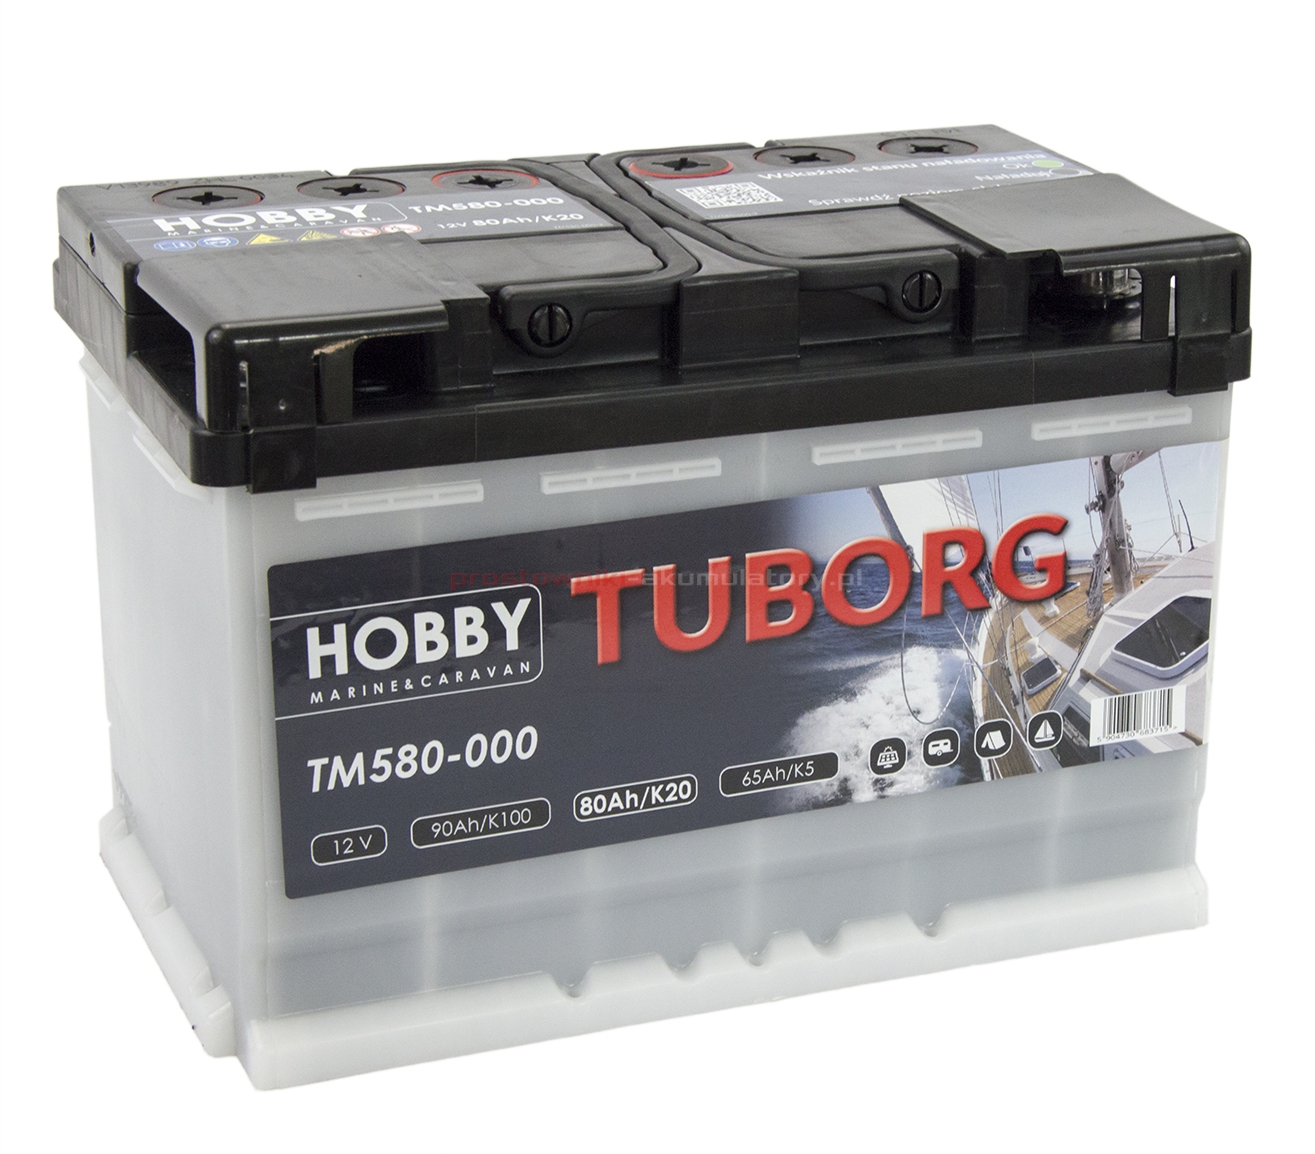 Akumulator Tuborg AGM 80Ah 800A TSA580-080 - prostowniki-akumulatory.pl